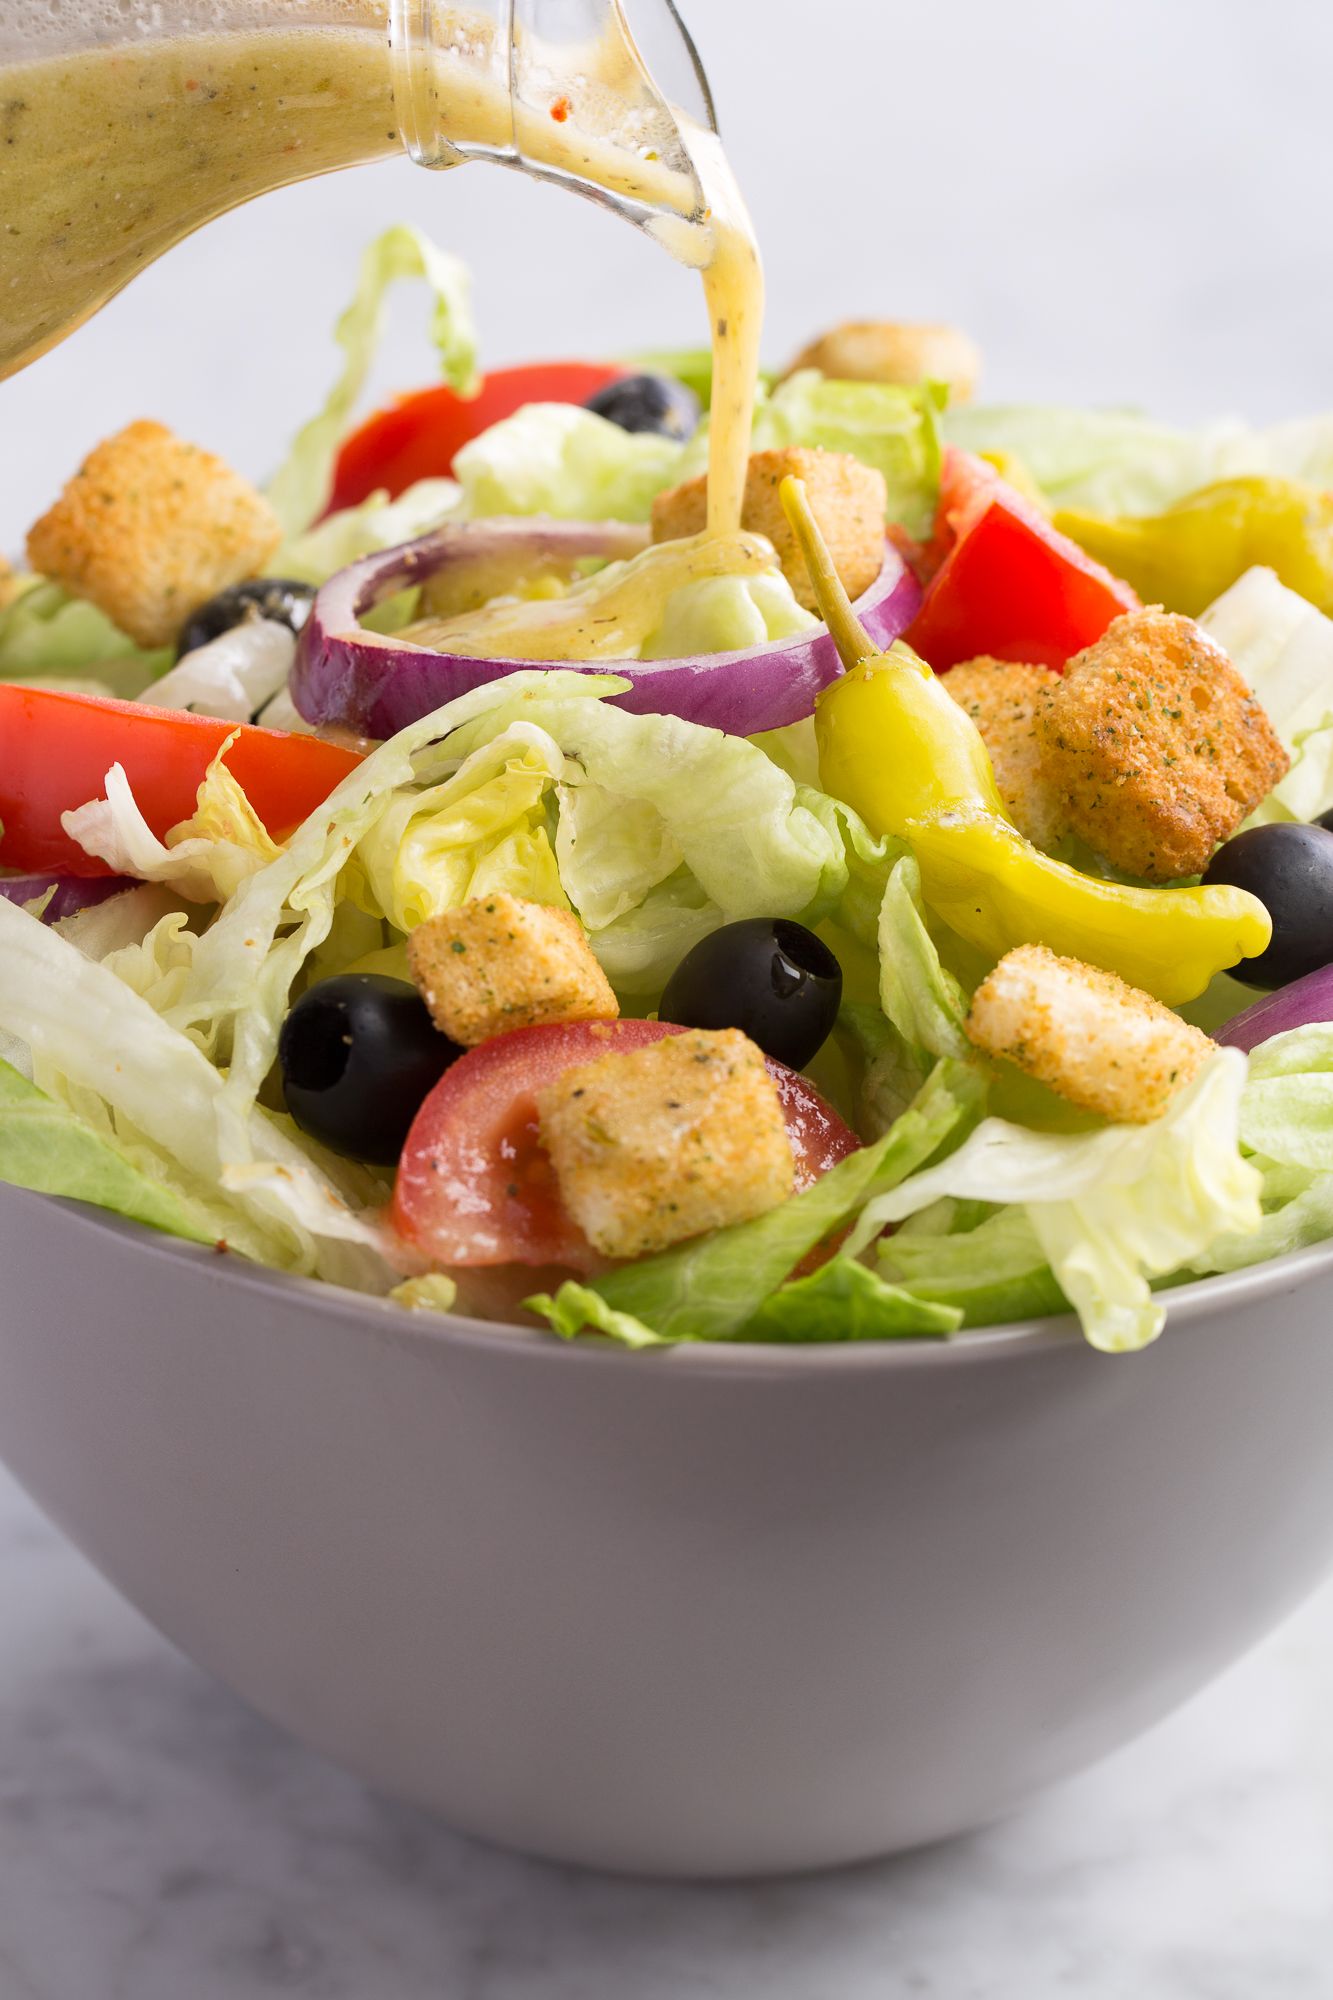 Copycat Olive Garden Salad Dressing + Video